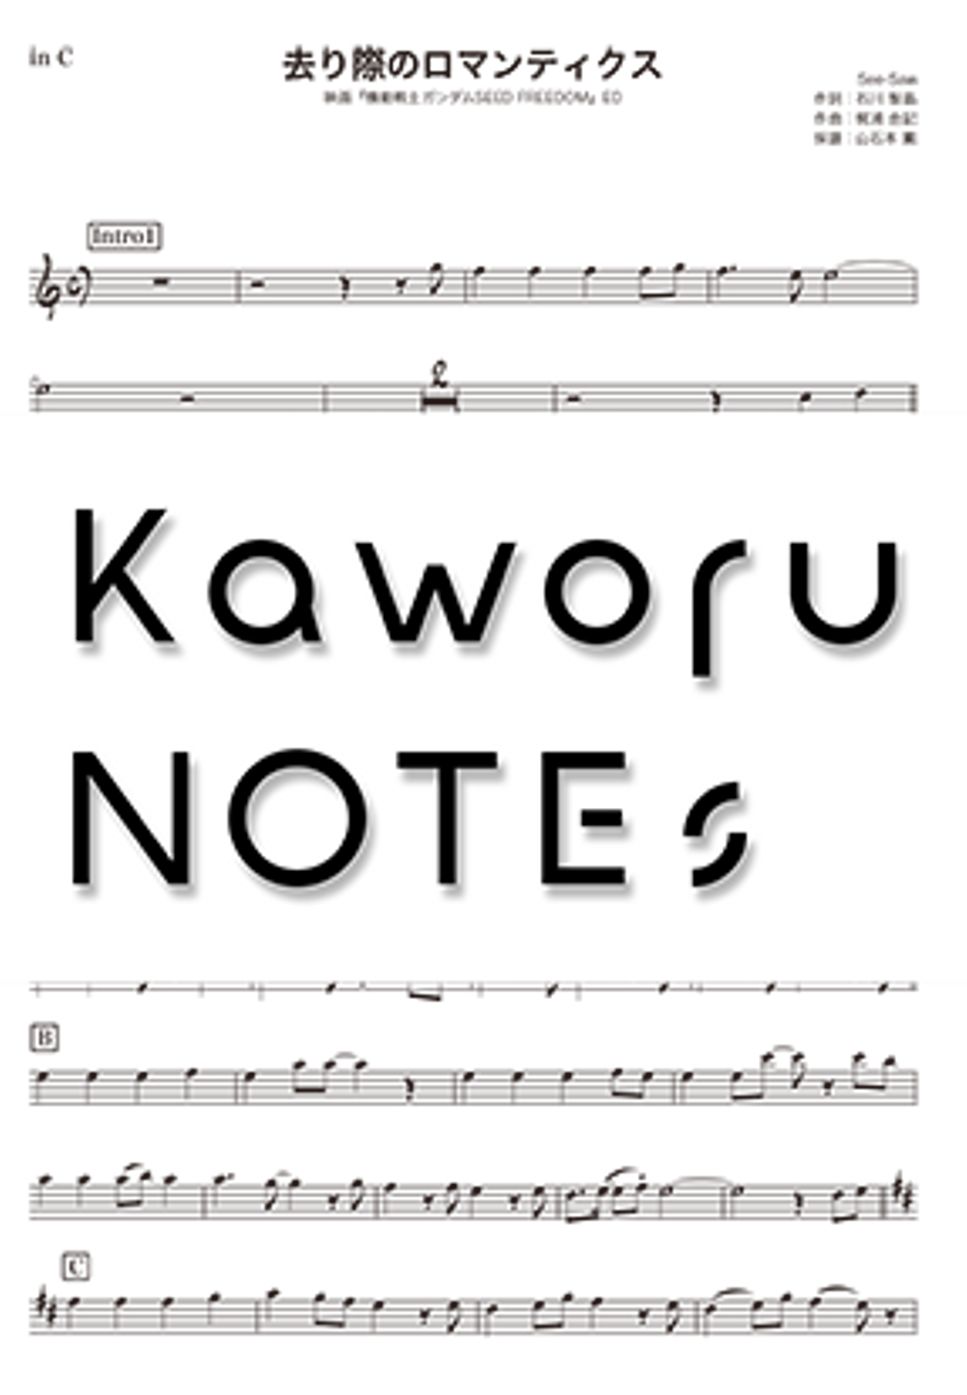 See-Saw - 去り際のロマンティクス（in B♭ /映画『機動戦士ガンダムSEED FREEDOM』） by Kaworu NOTEs